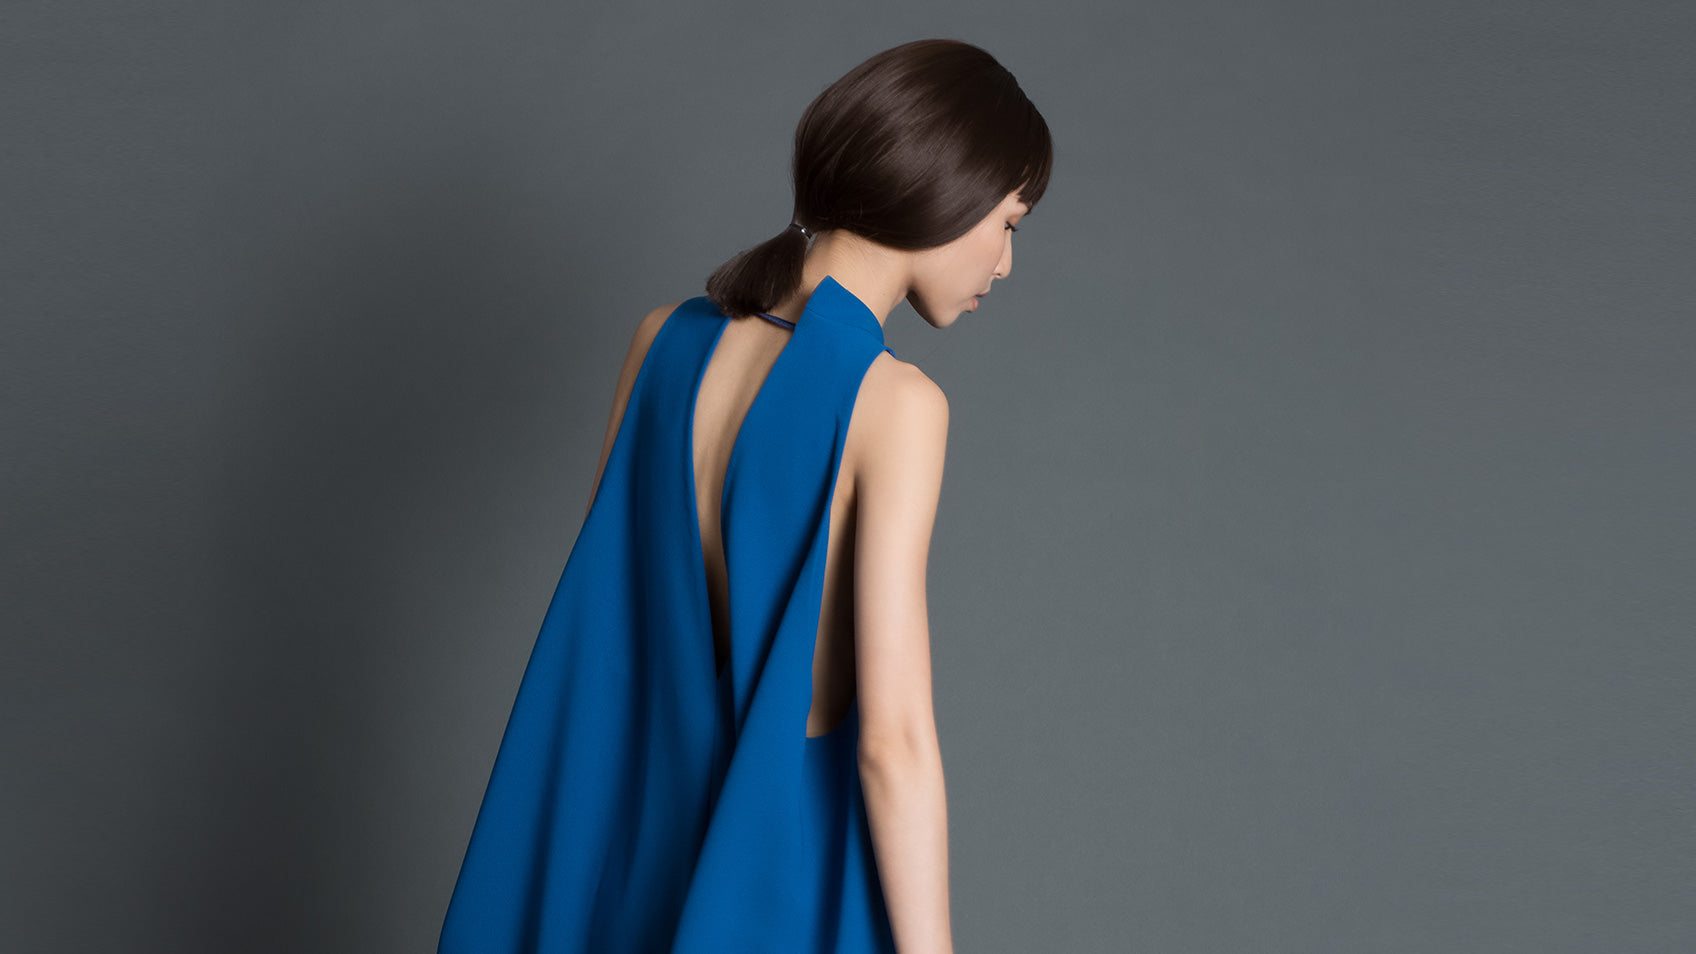 COS Draped Neck-tie Dress in blue, Women's Fashion, Dresses & Sets